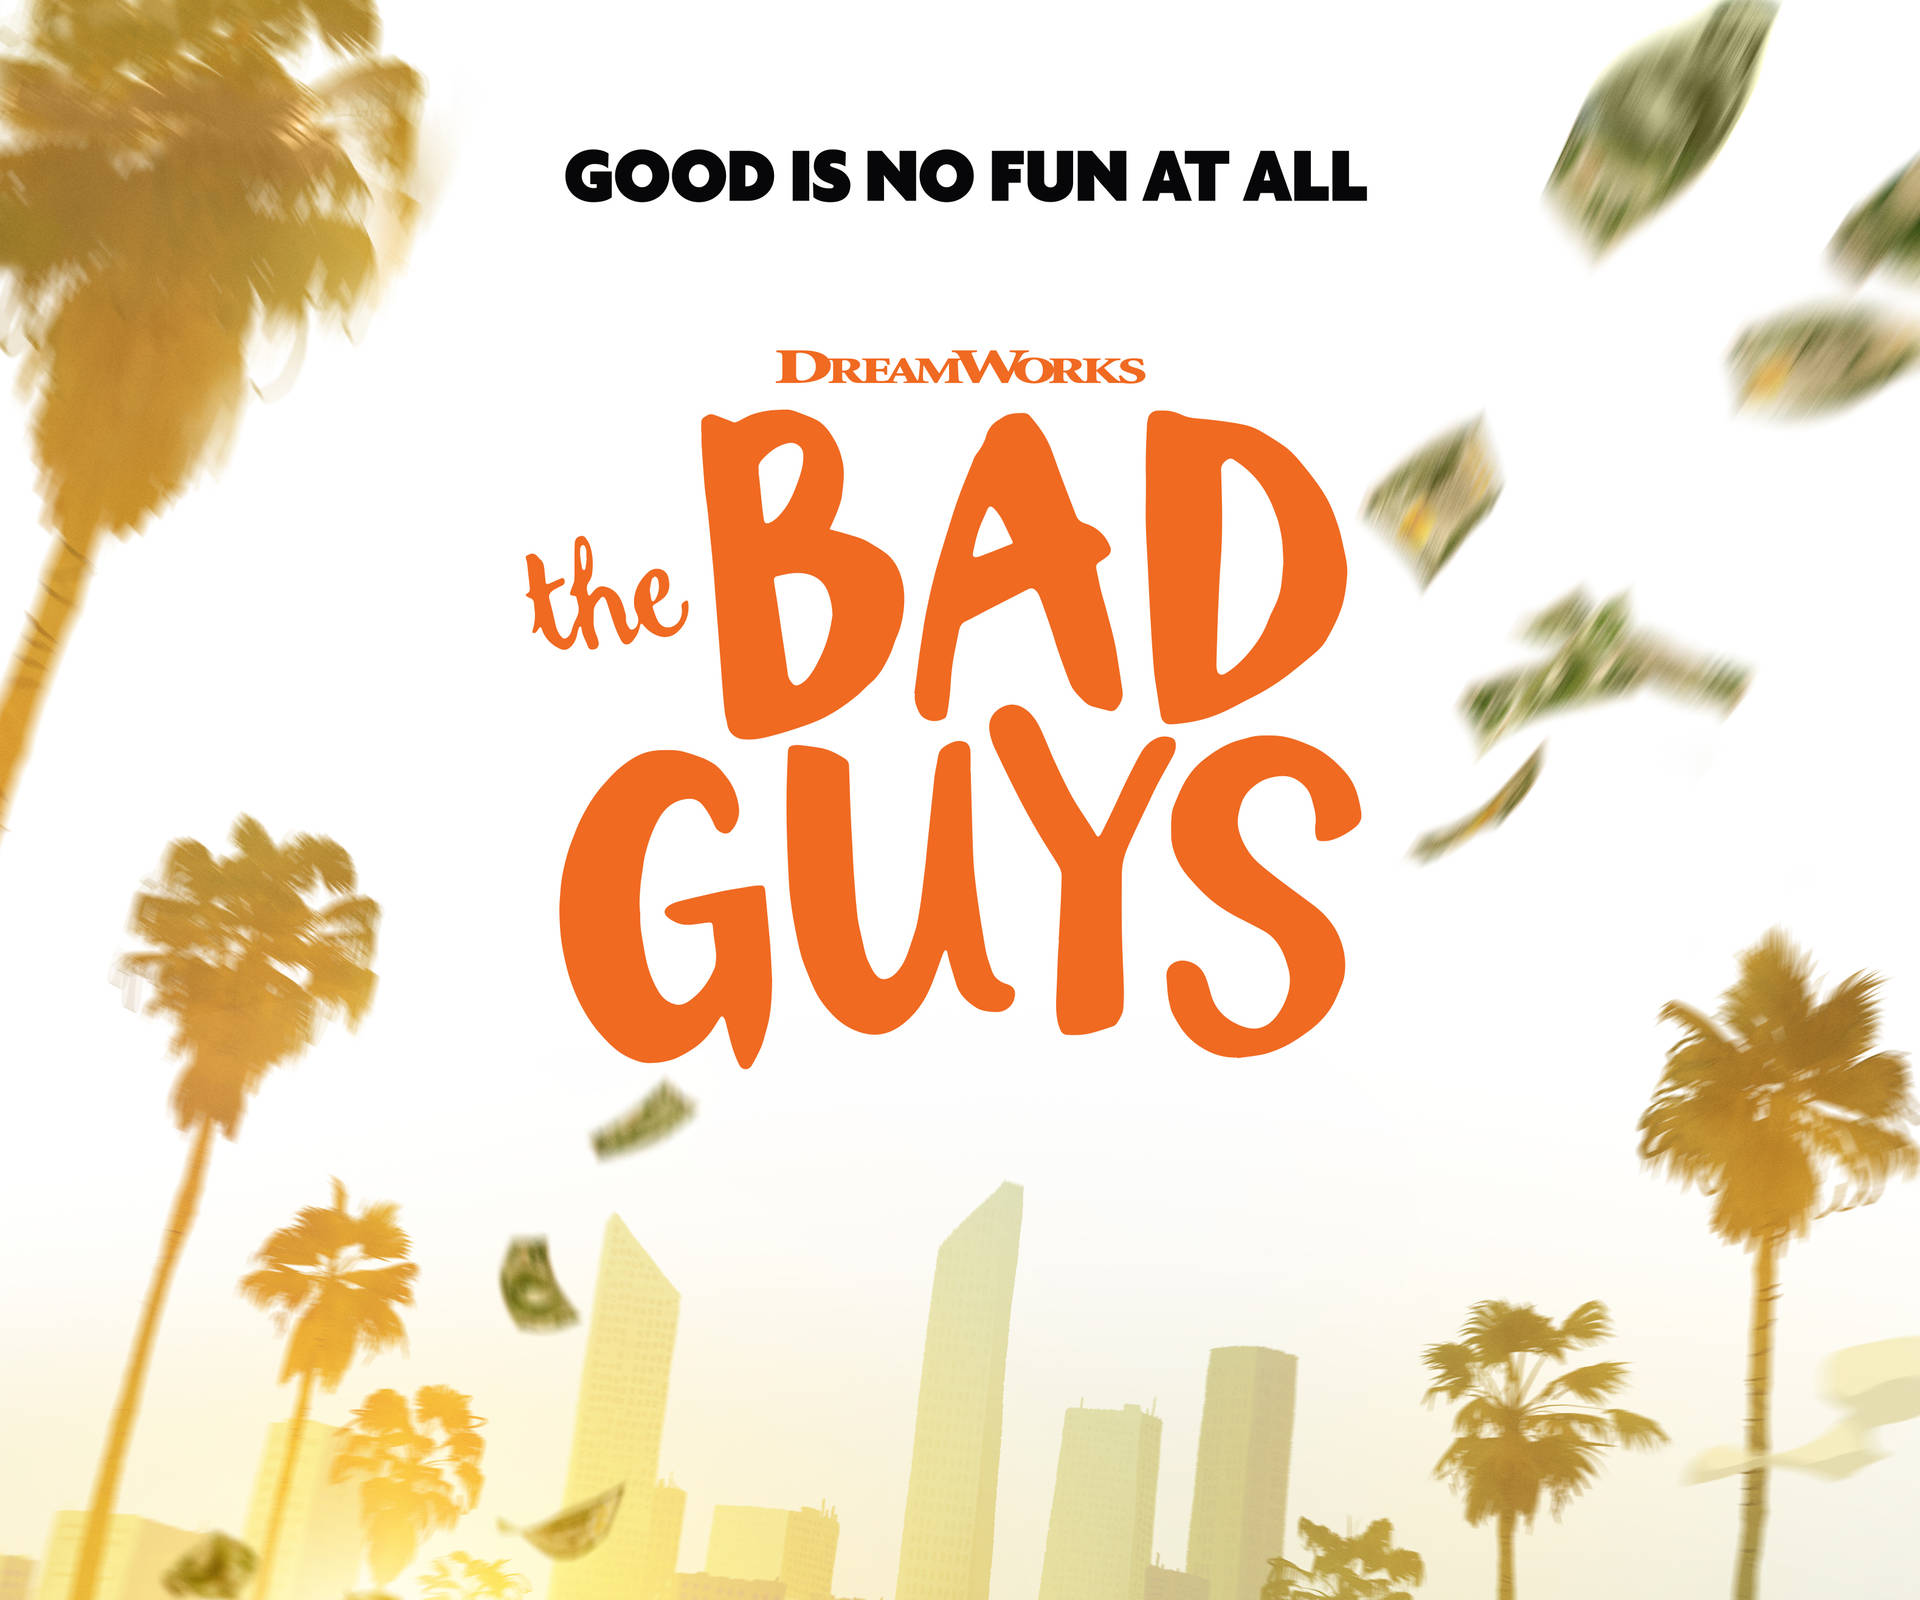 The Bad Guys Digital Poster